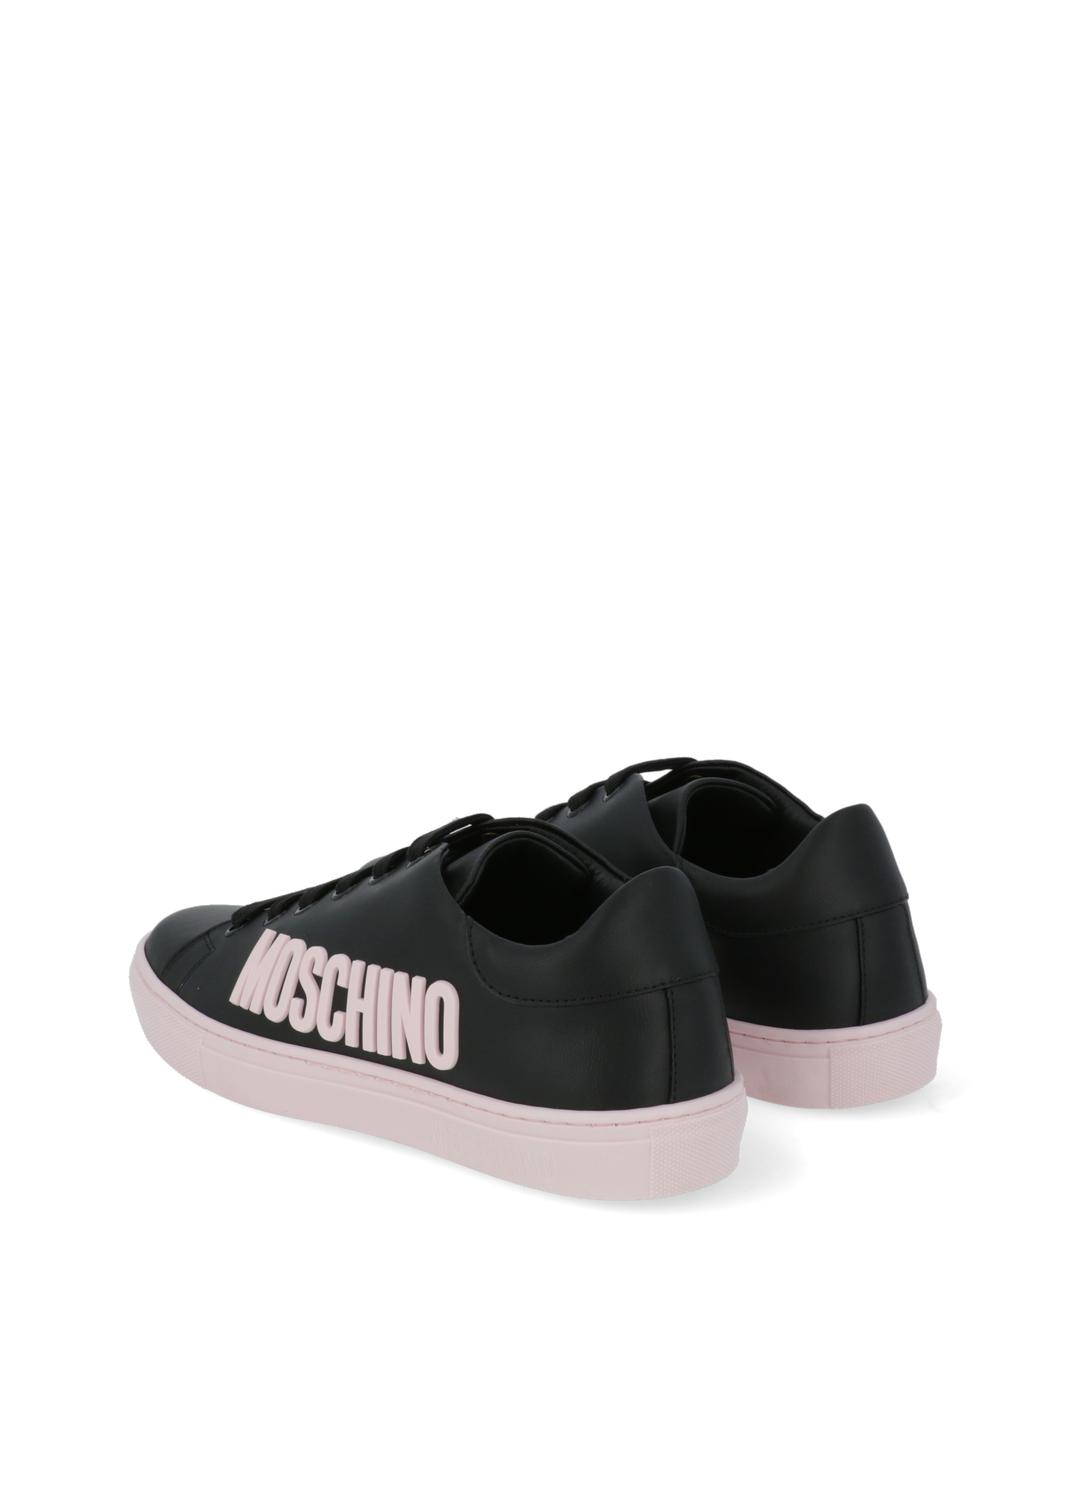 Moschino tenis sneakers bajos con logo para mujer MSC-MA15122